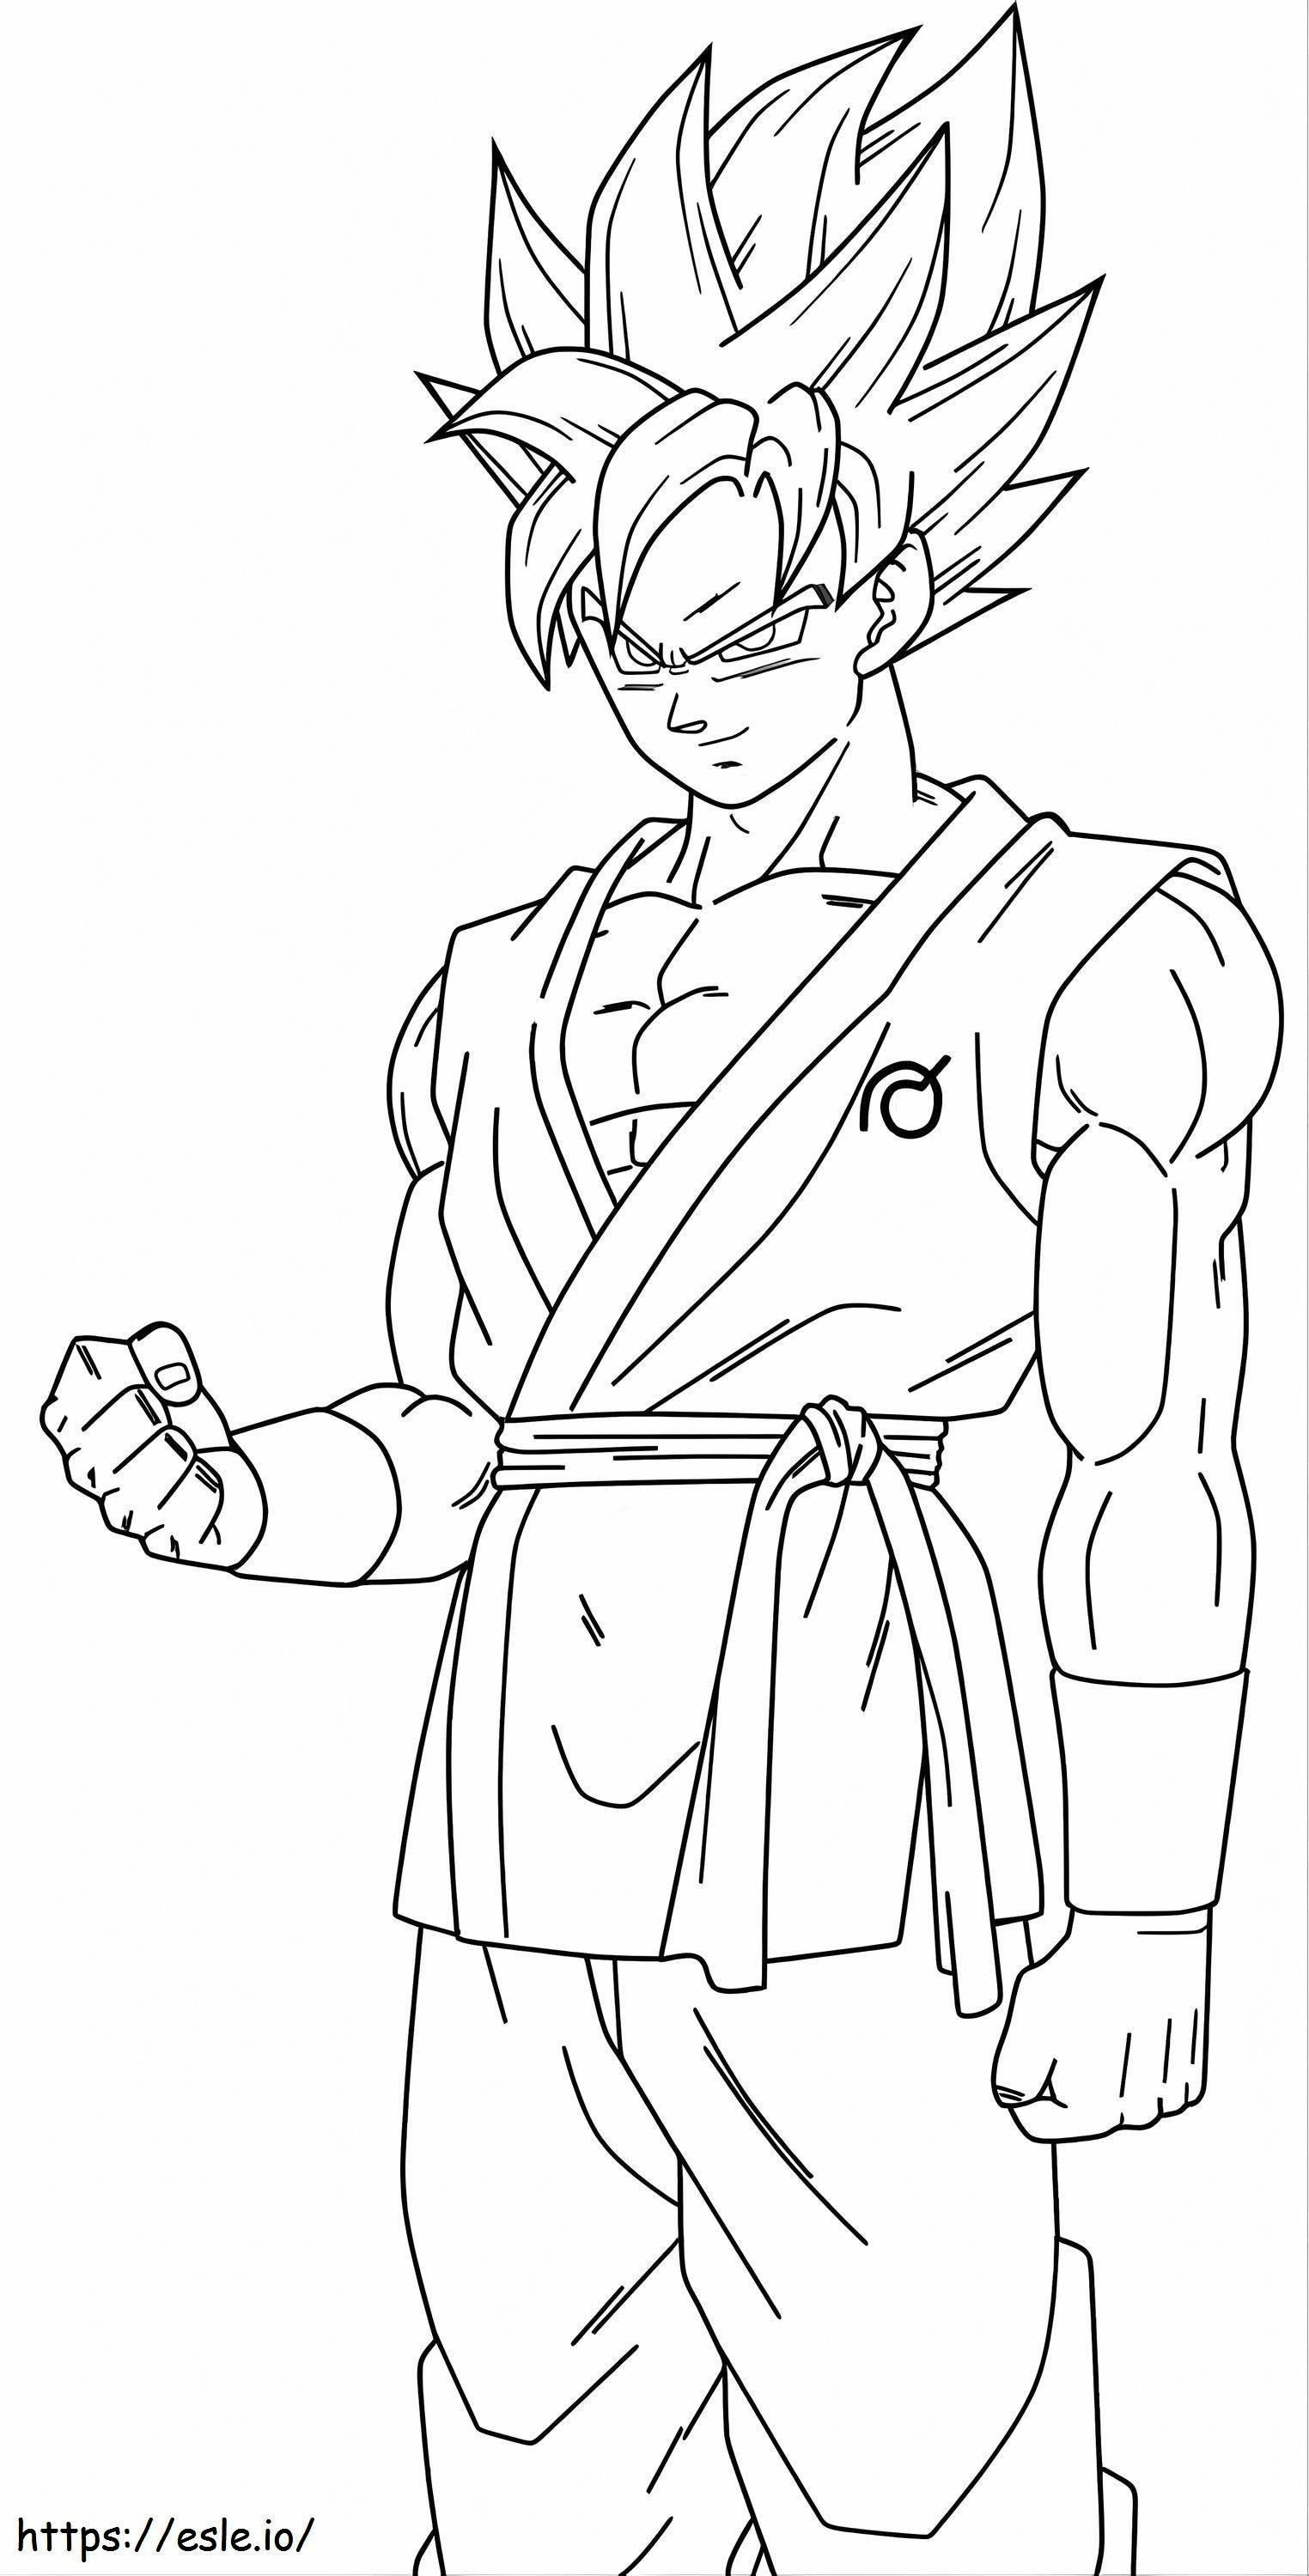 Smiling Goku Ssj1 coloring page